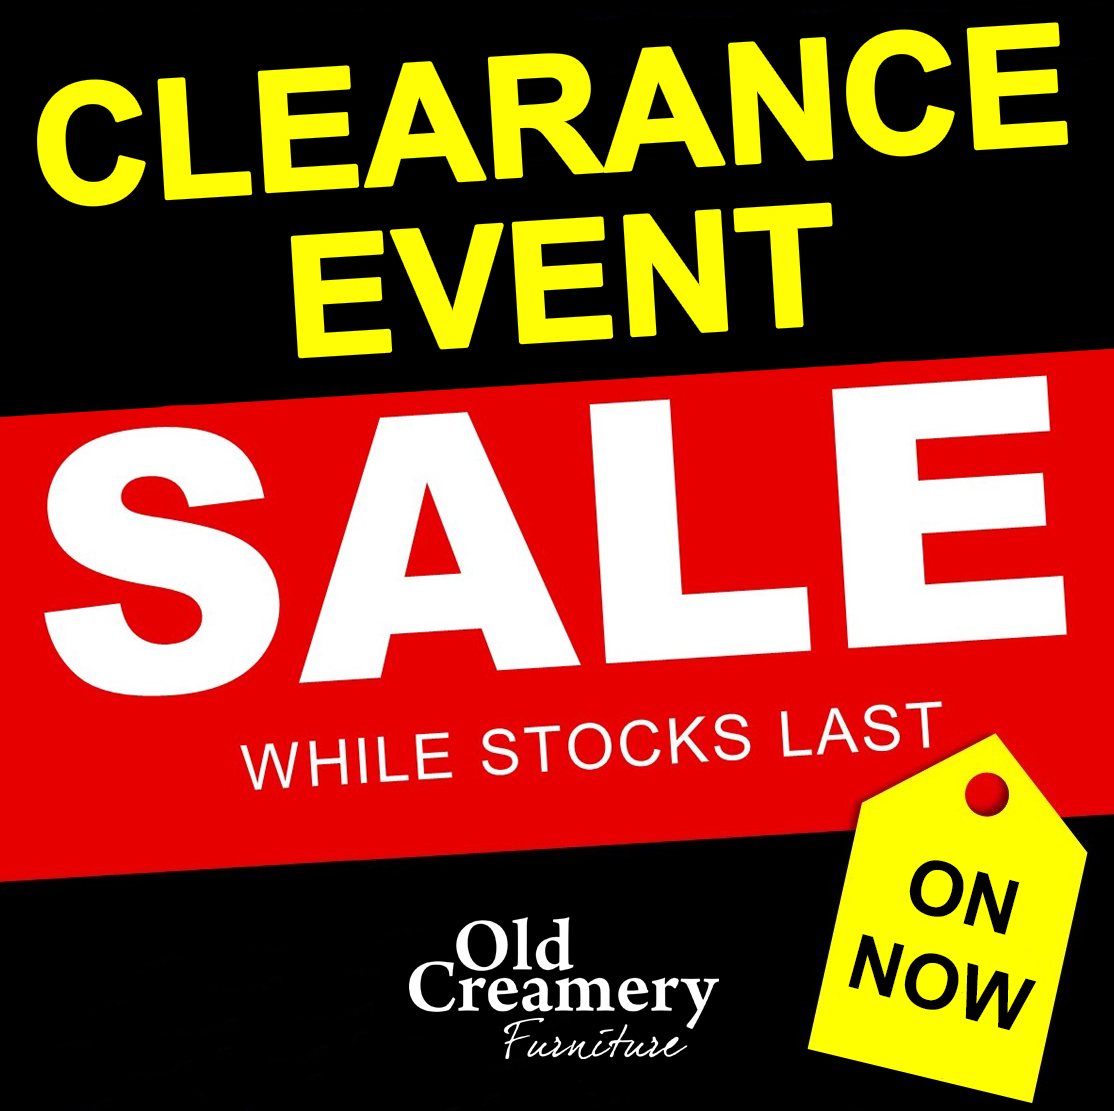 Old Creamery Furniture clearance